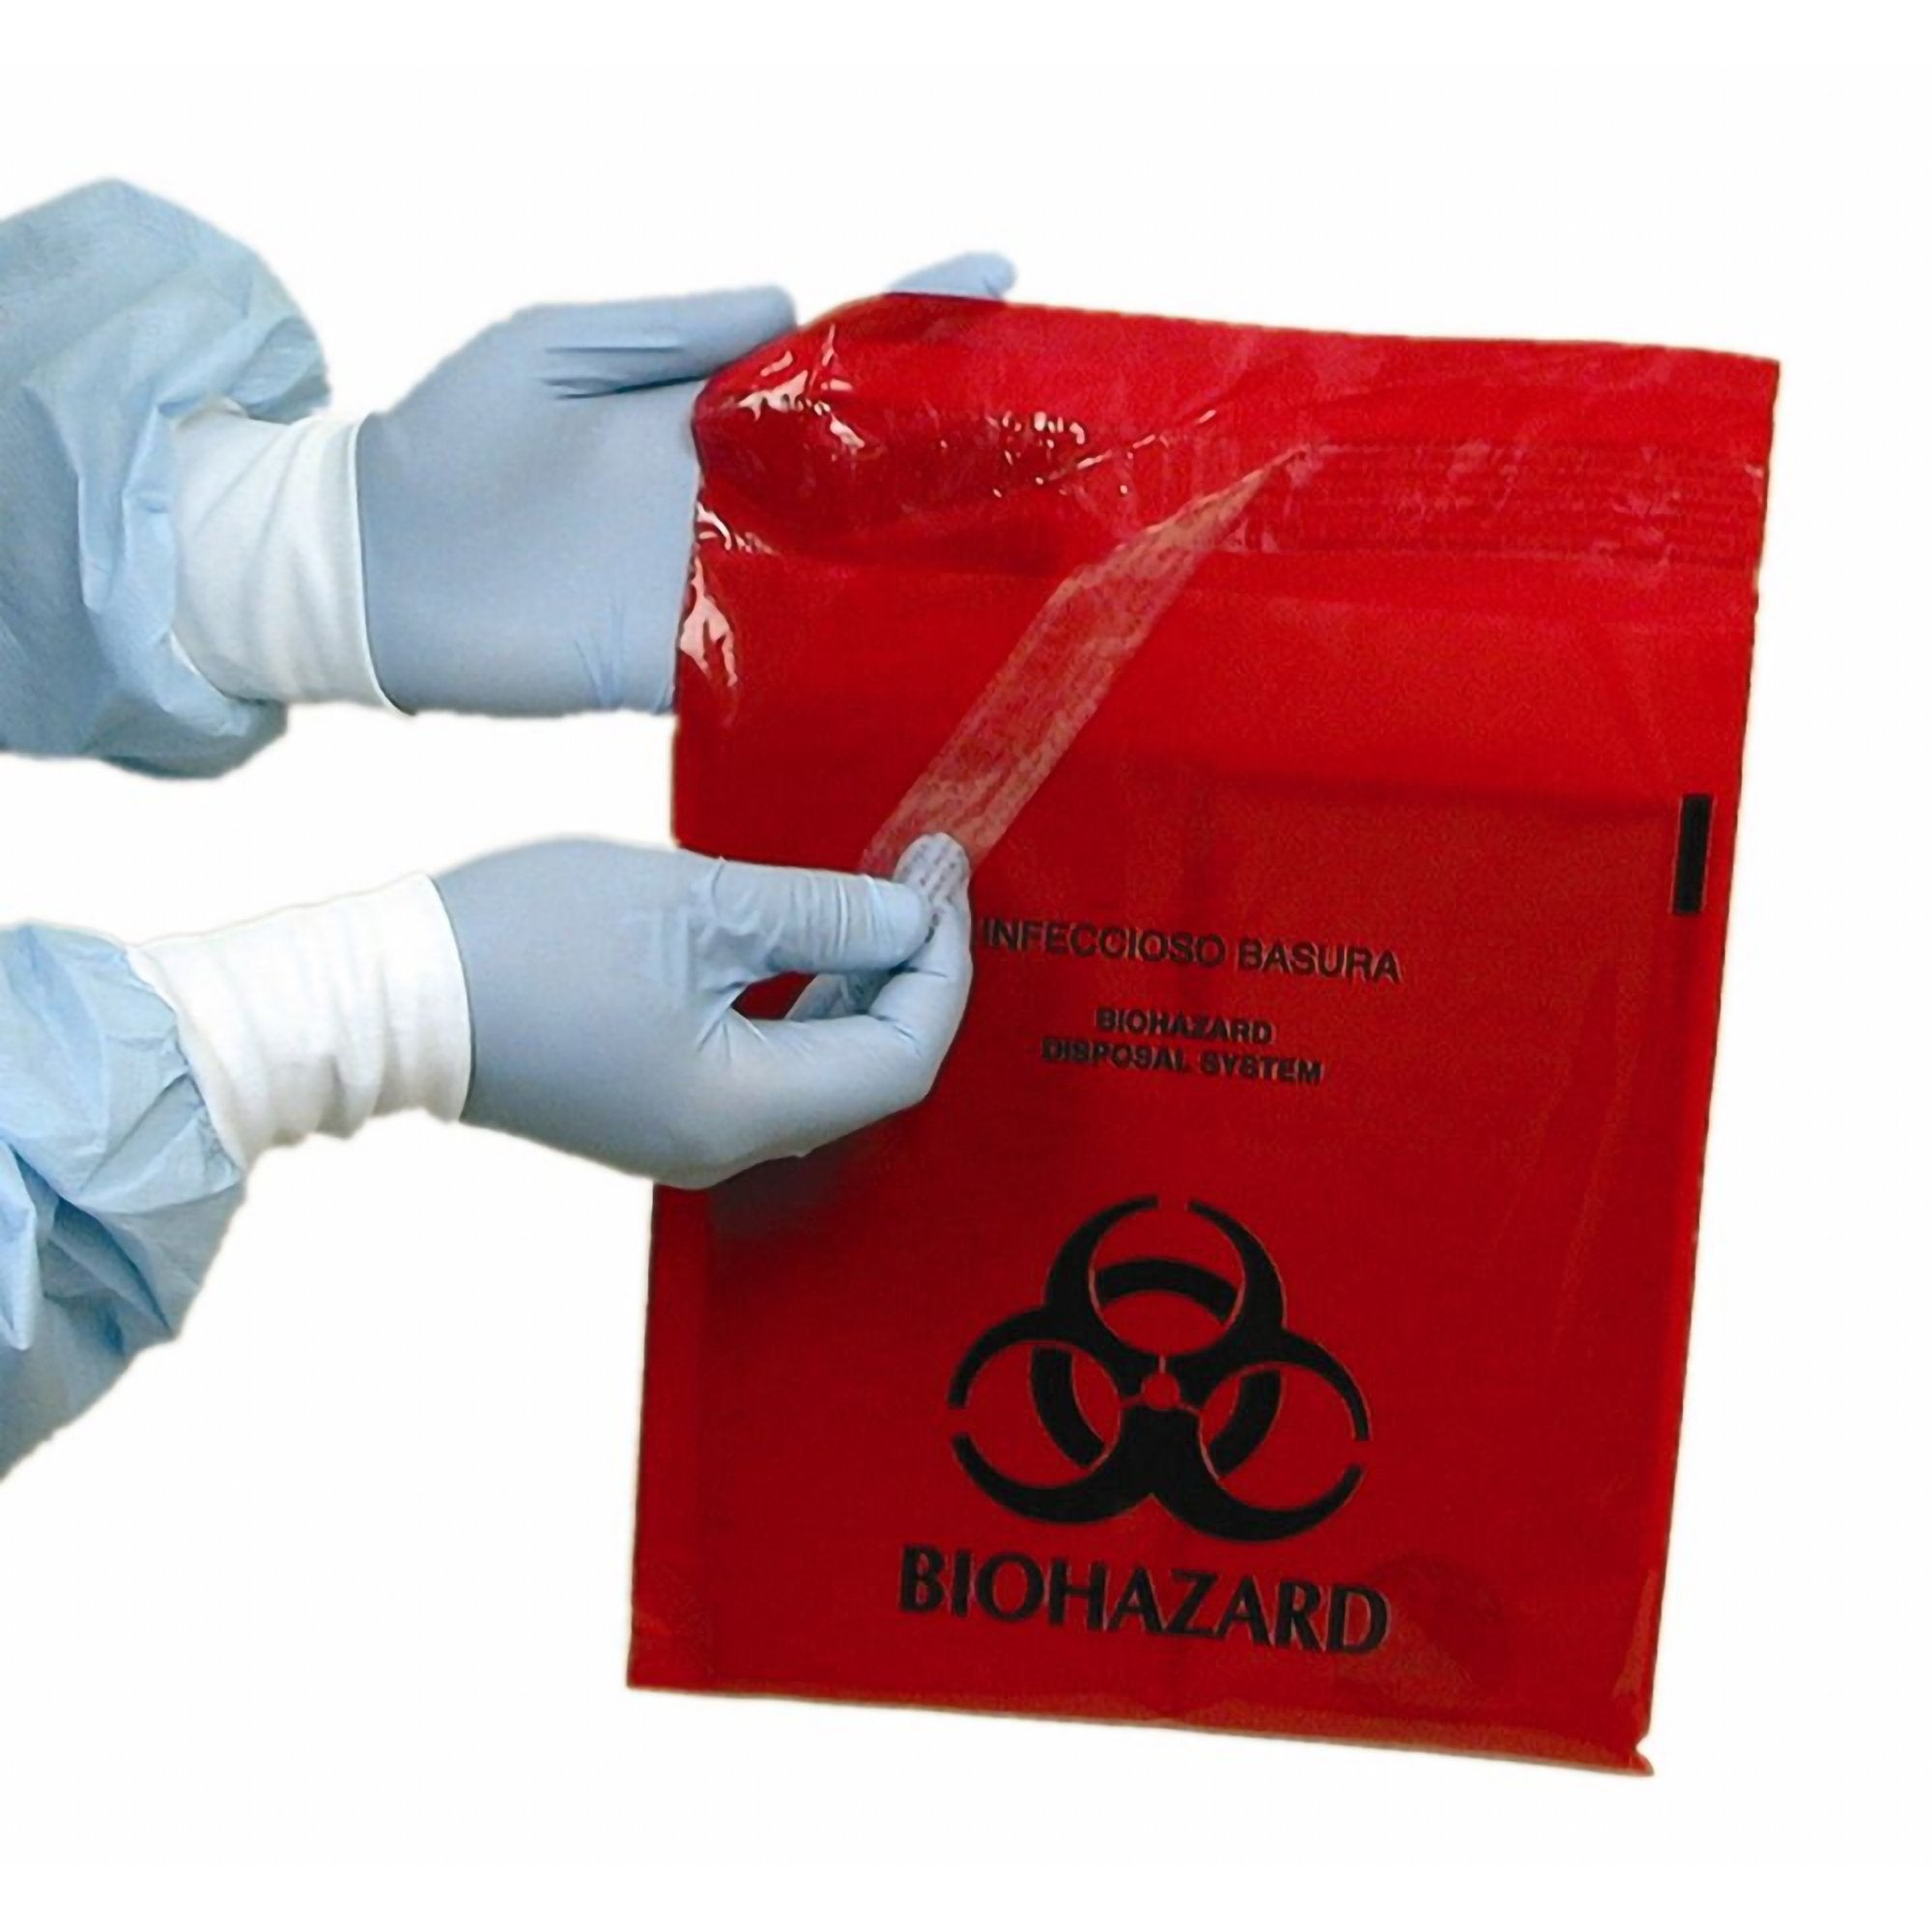 Biohazard Waste Bag Unimed - Midwest 1.4 Quart Red Bag 9 X 10 Inch